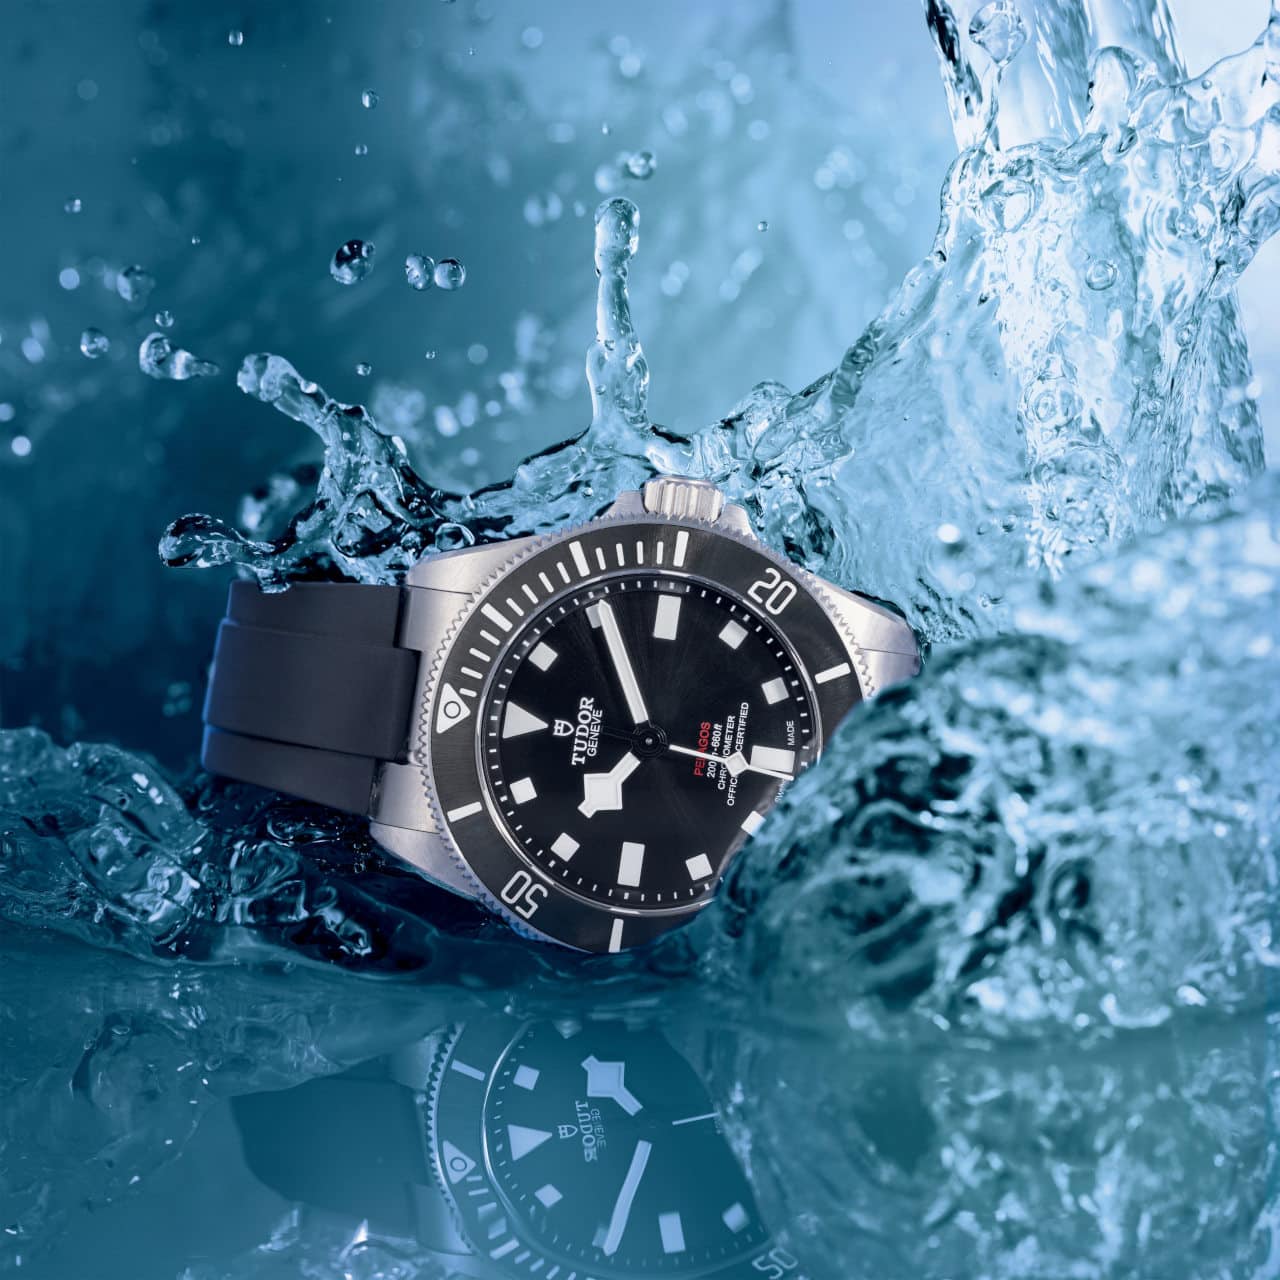 Men's luxury watches Tudor releases a new Pelagos in 39 mm